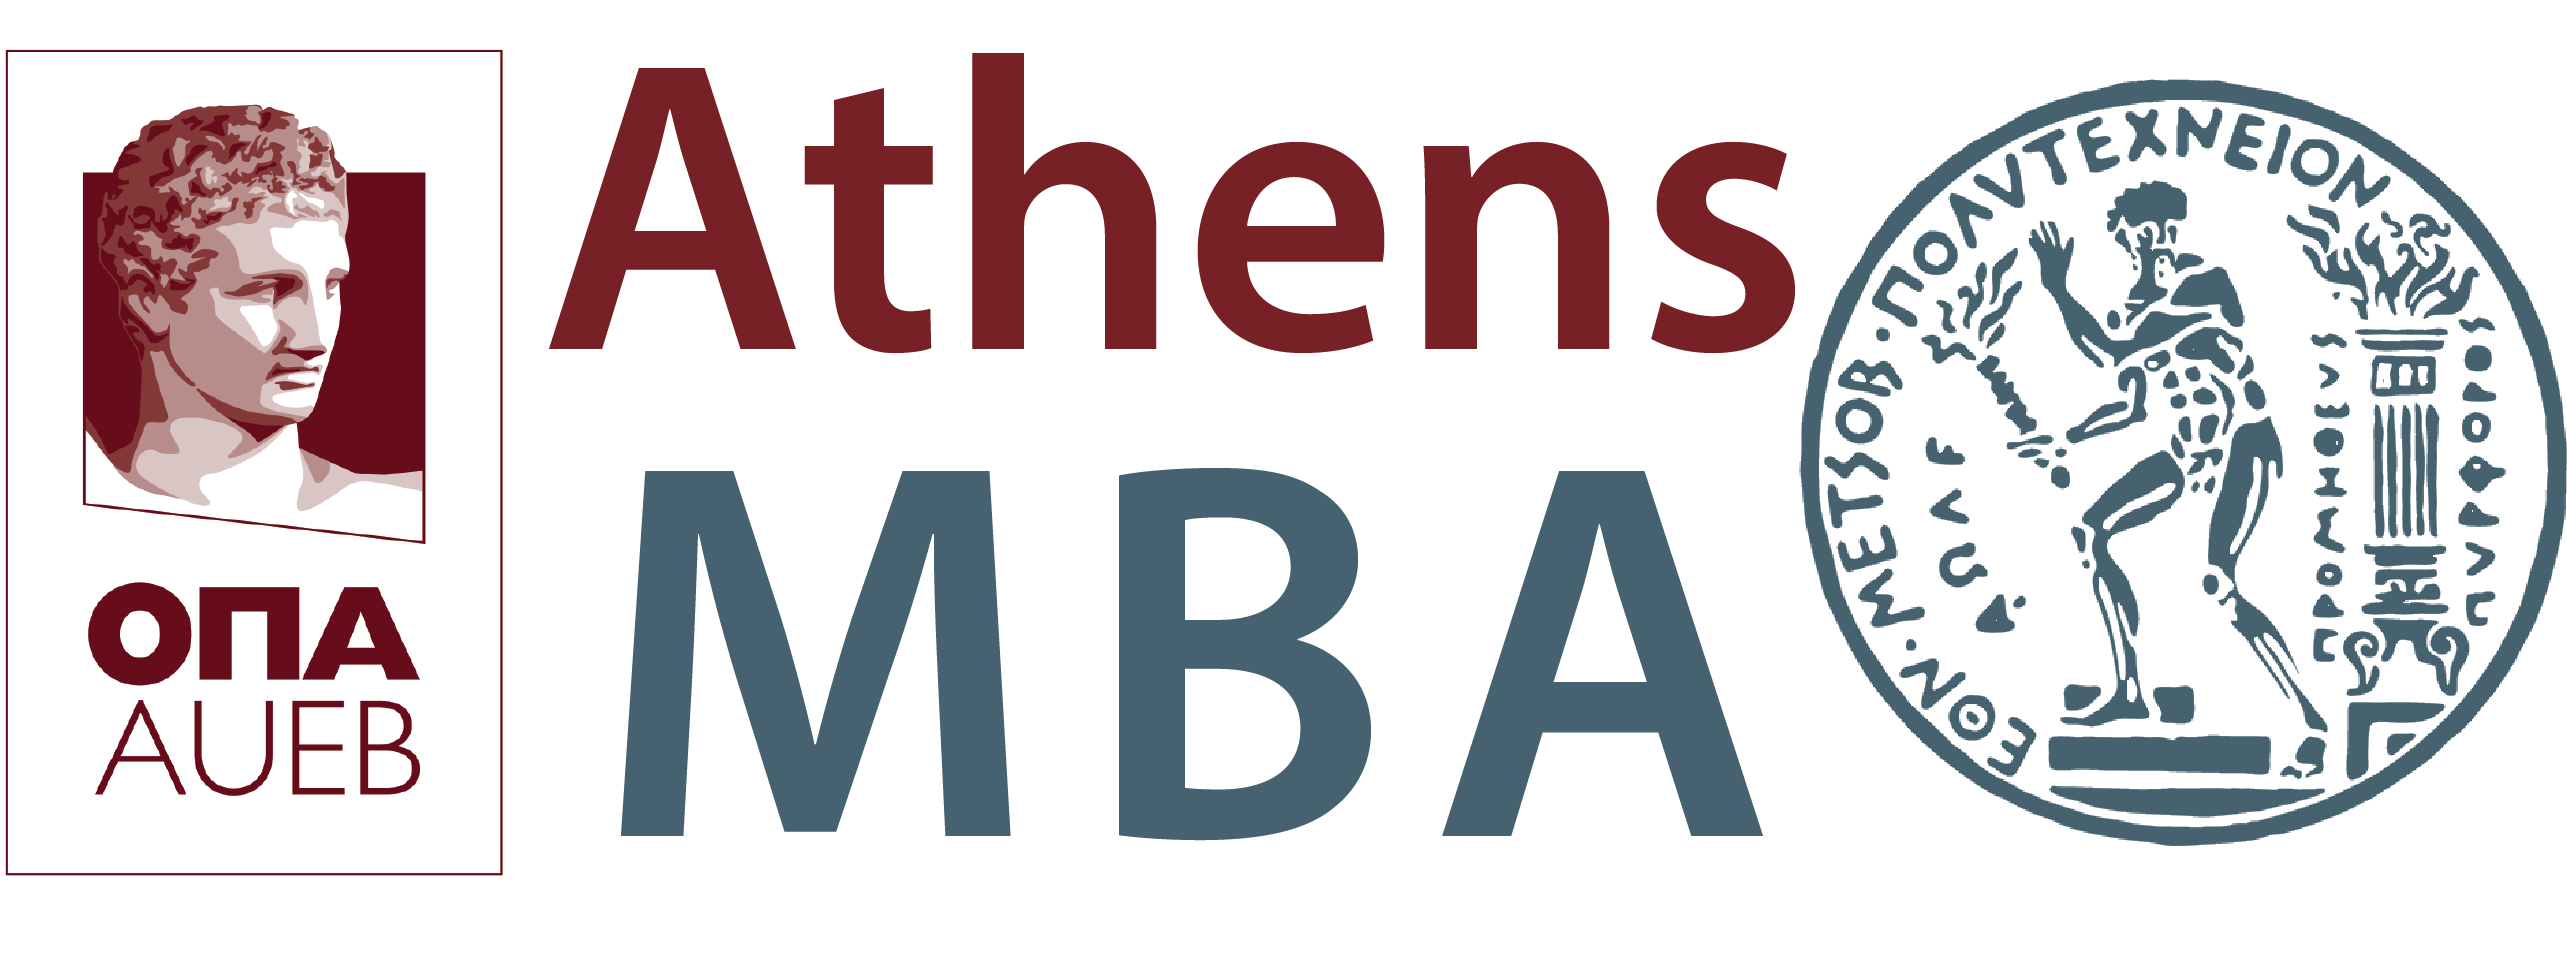 Athens MBA